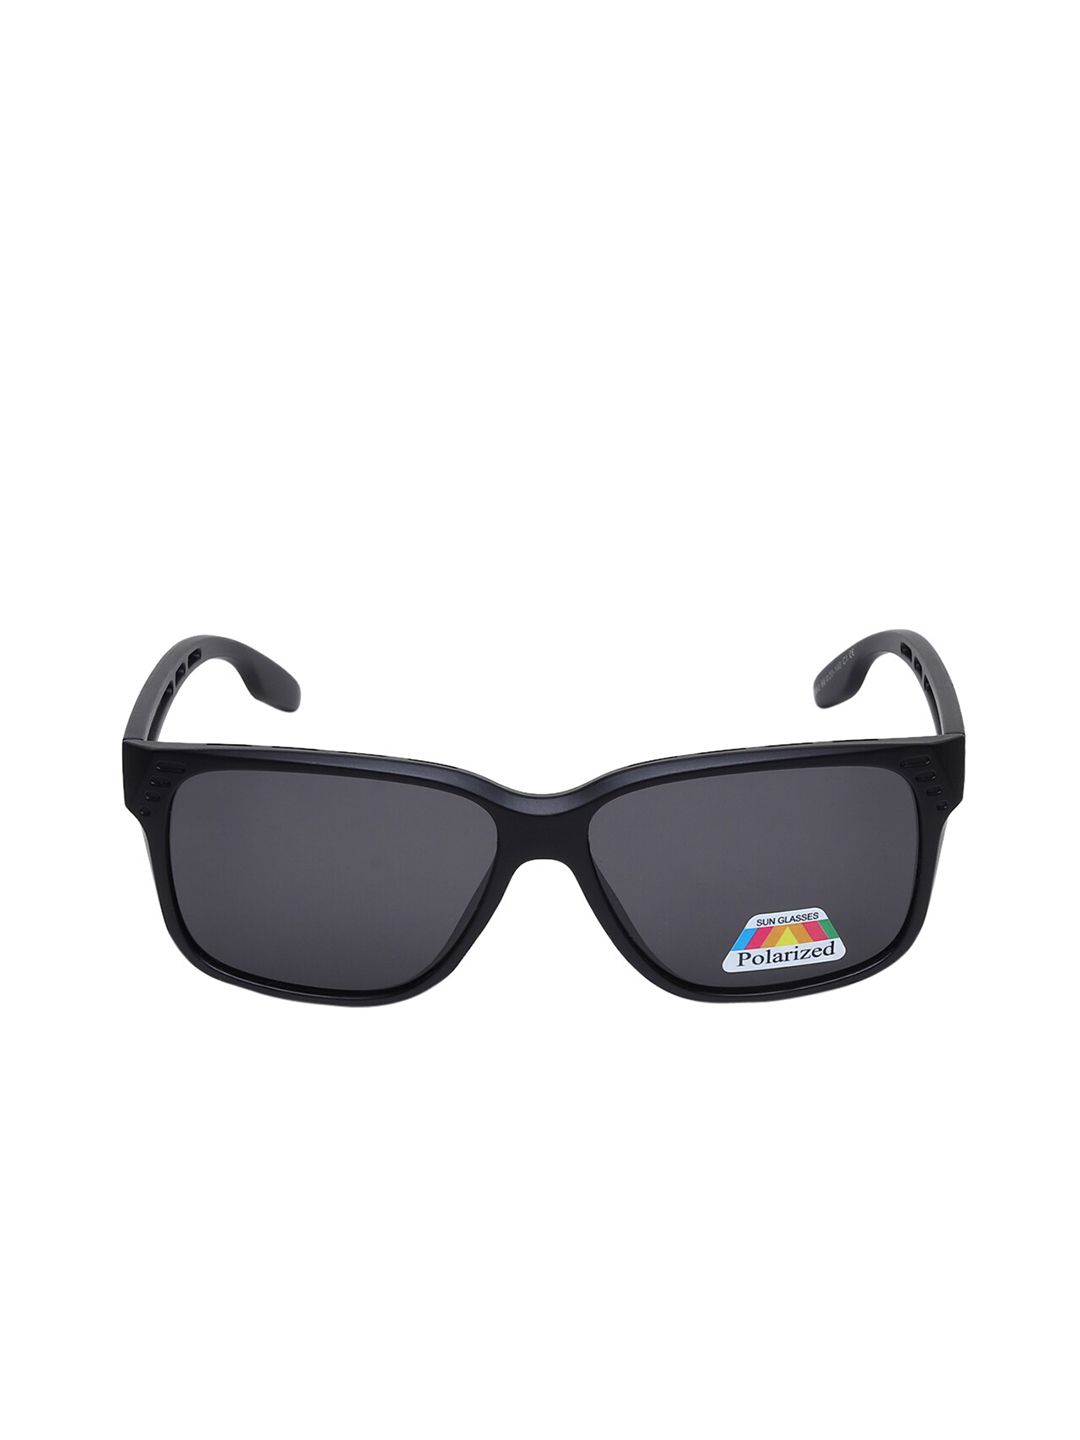 CRIBA Unisex Black Lens & Black Square Sunglasses with UV Protected Lens Price in India